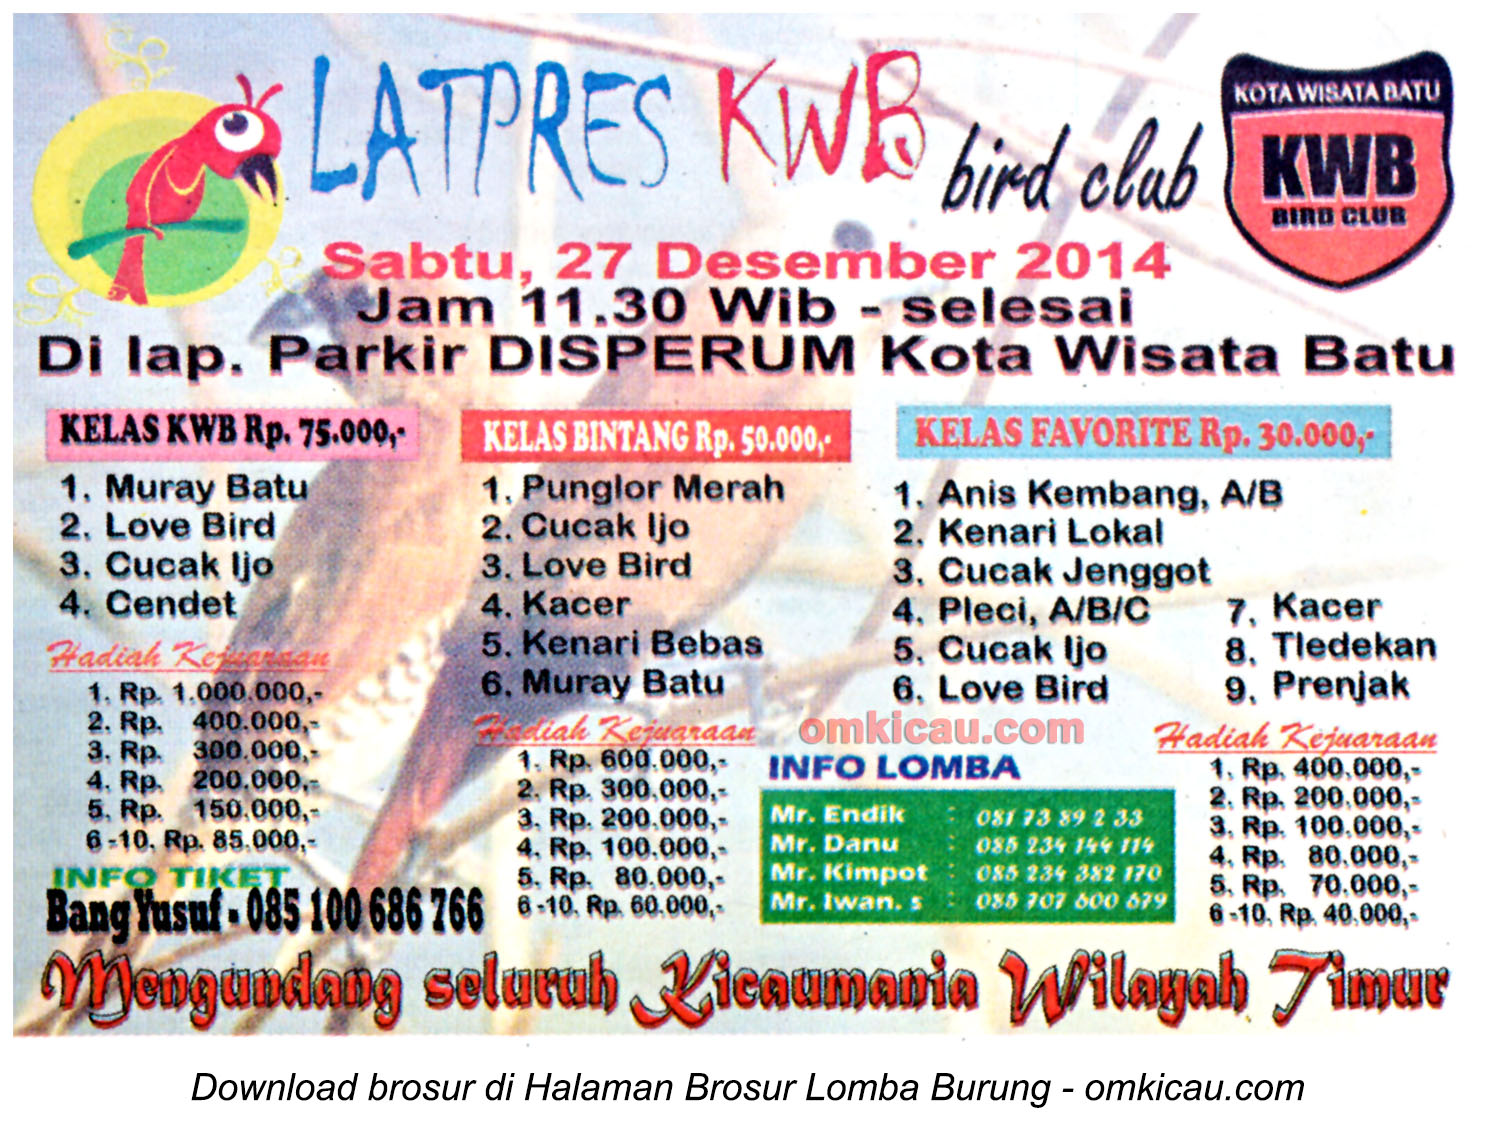 Brosur Latpres KWB Bird Club, Kota Batu, 27 Desember 2014